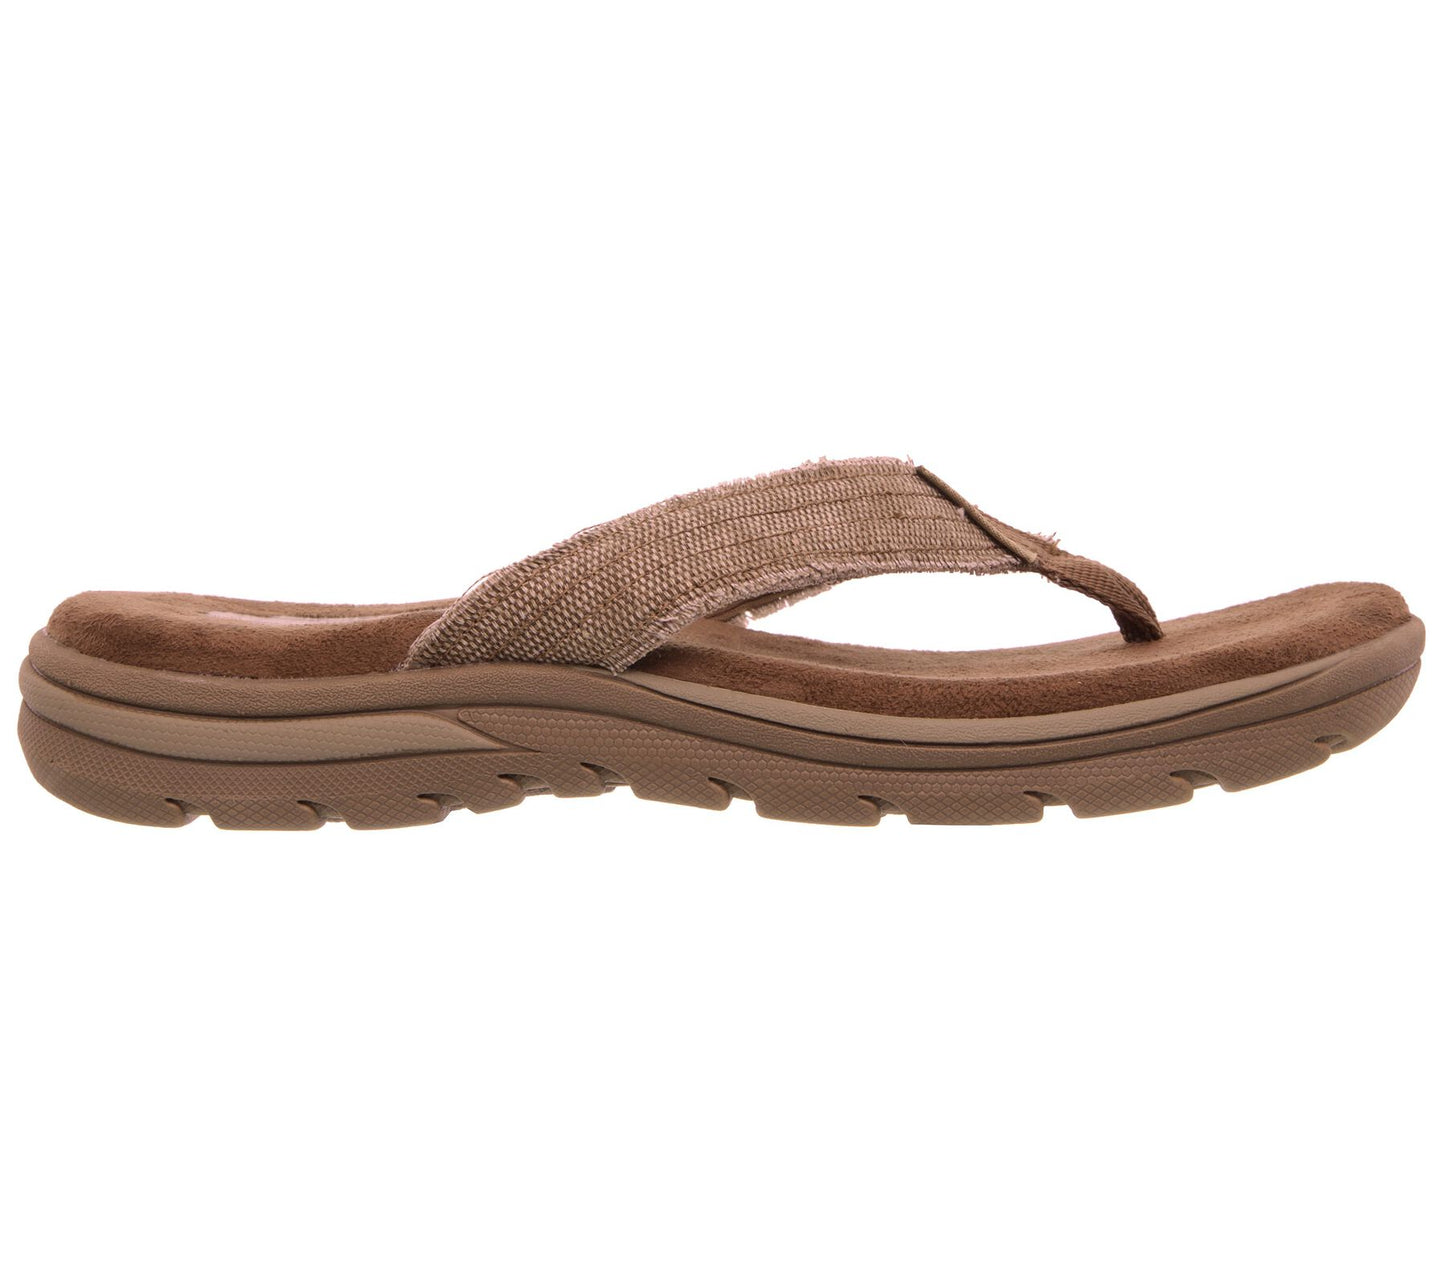 Men's Skechers Relaxed Fit: Supreme - Bosnia Sandals, 64152 /TAN Multiple Sizes